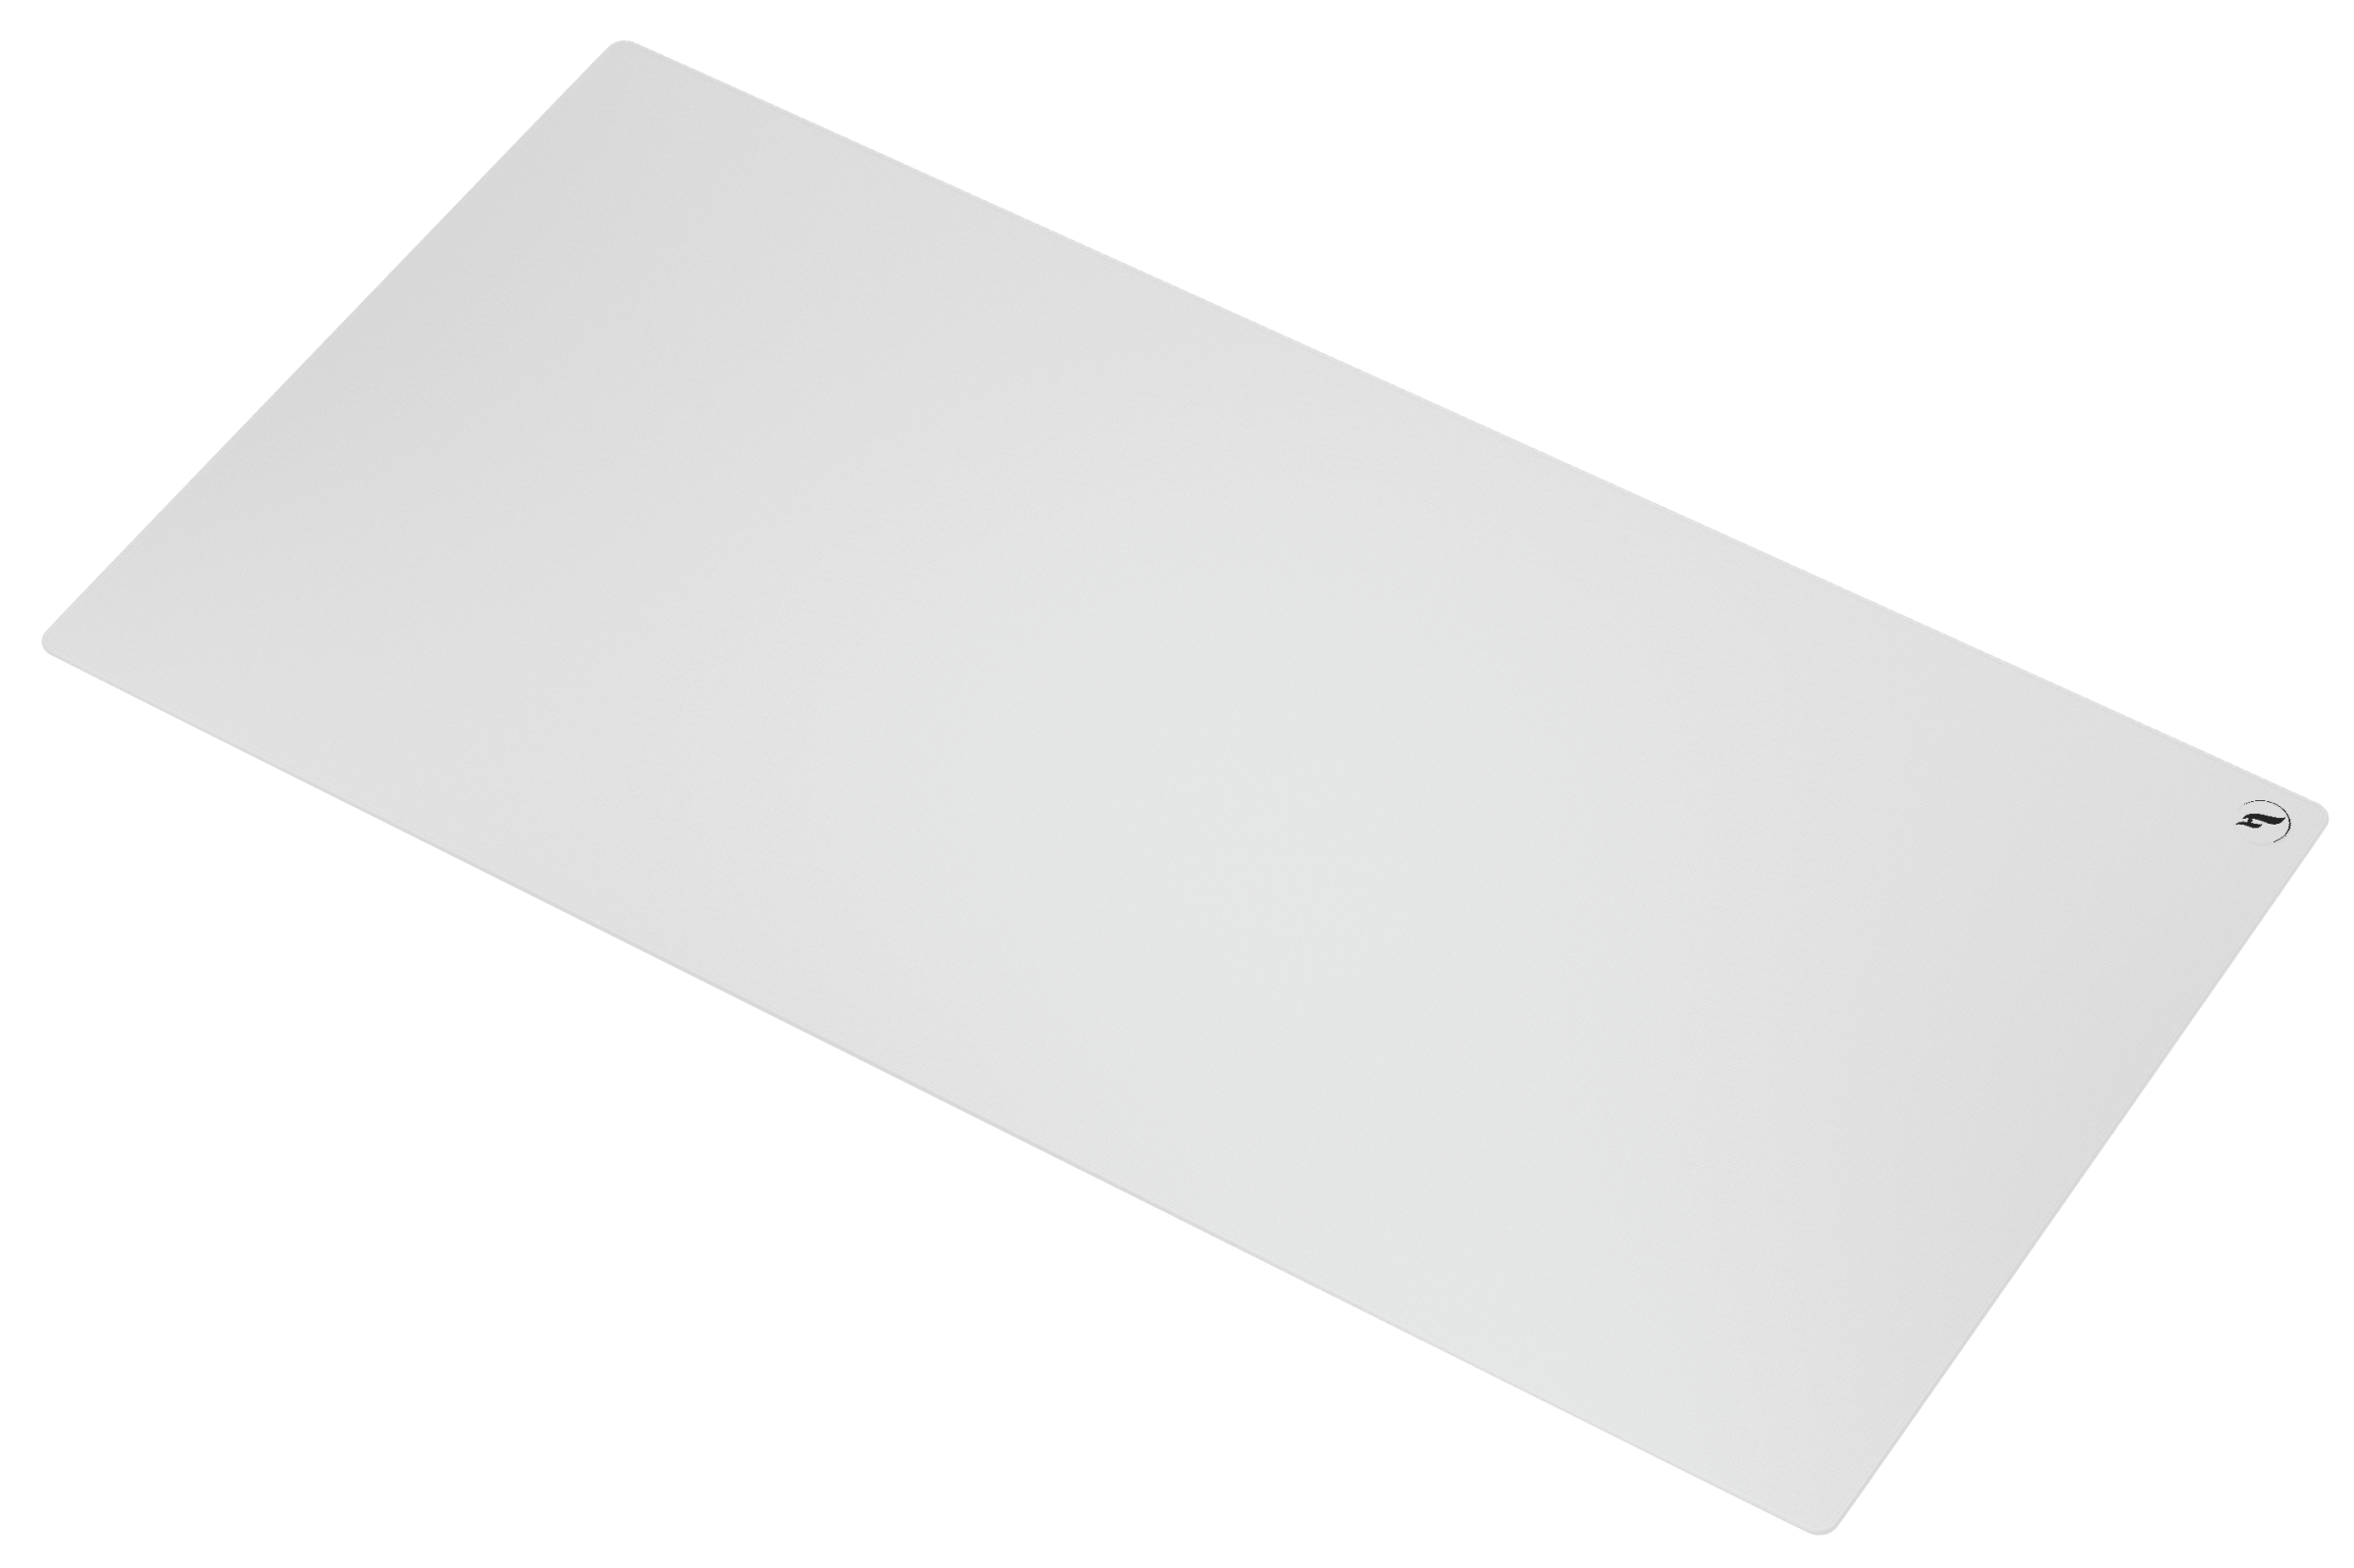 Odin Gaming 3XL ZeroGravity Mouse Pad White/White MK4UTTMBBP |39591|